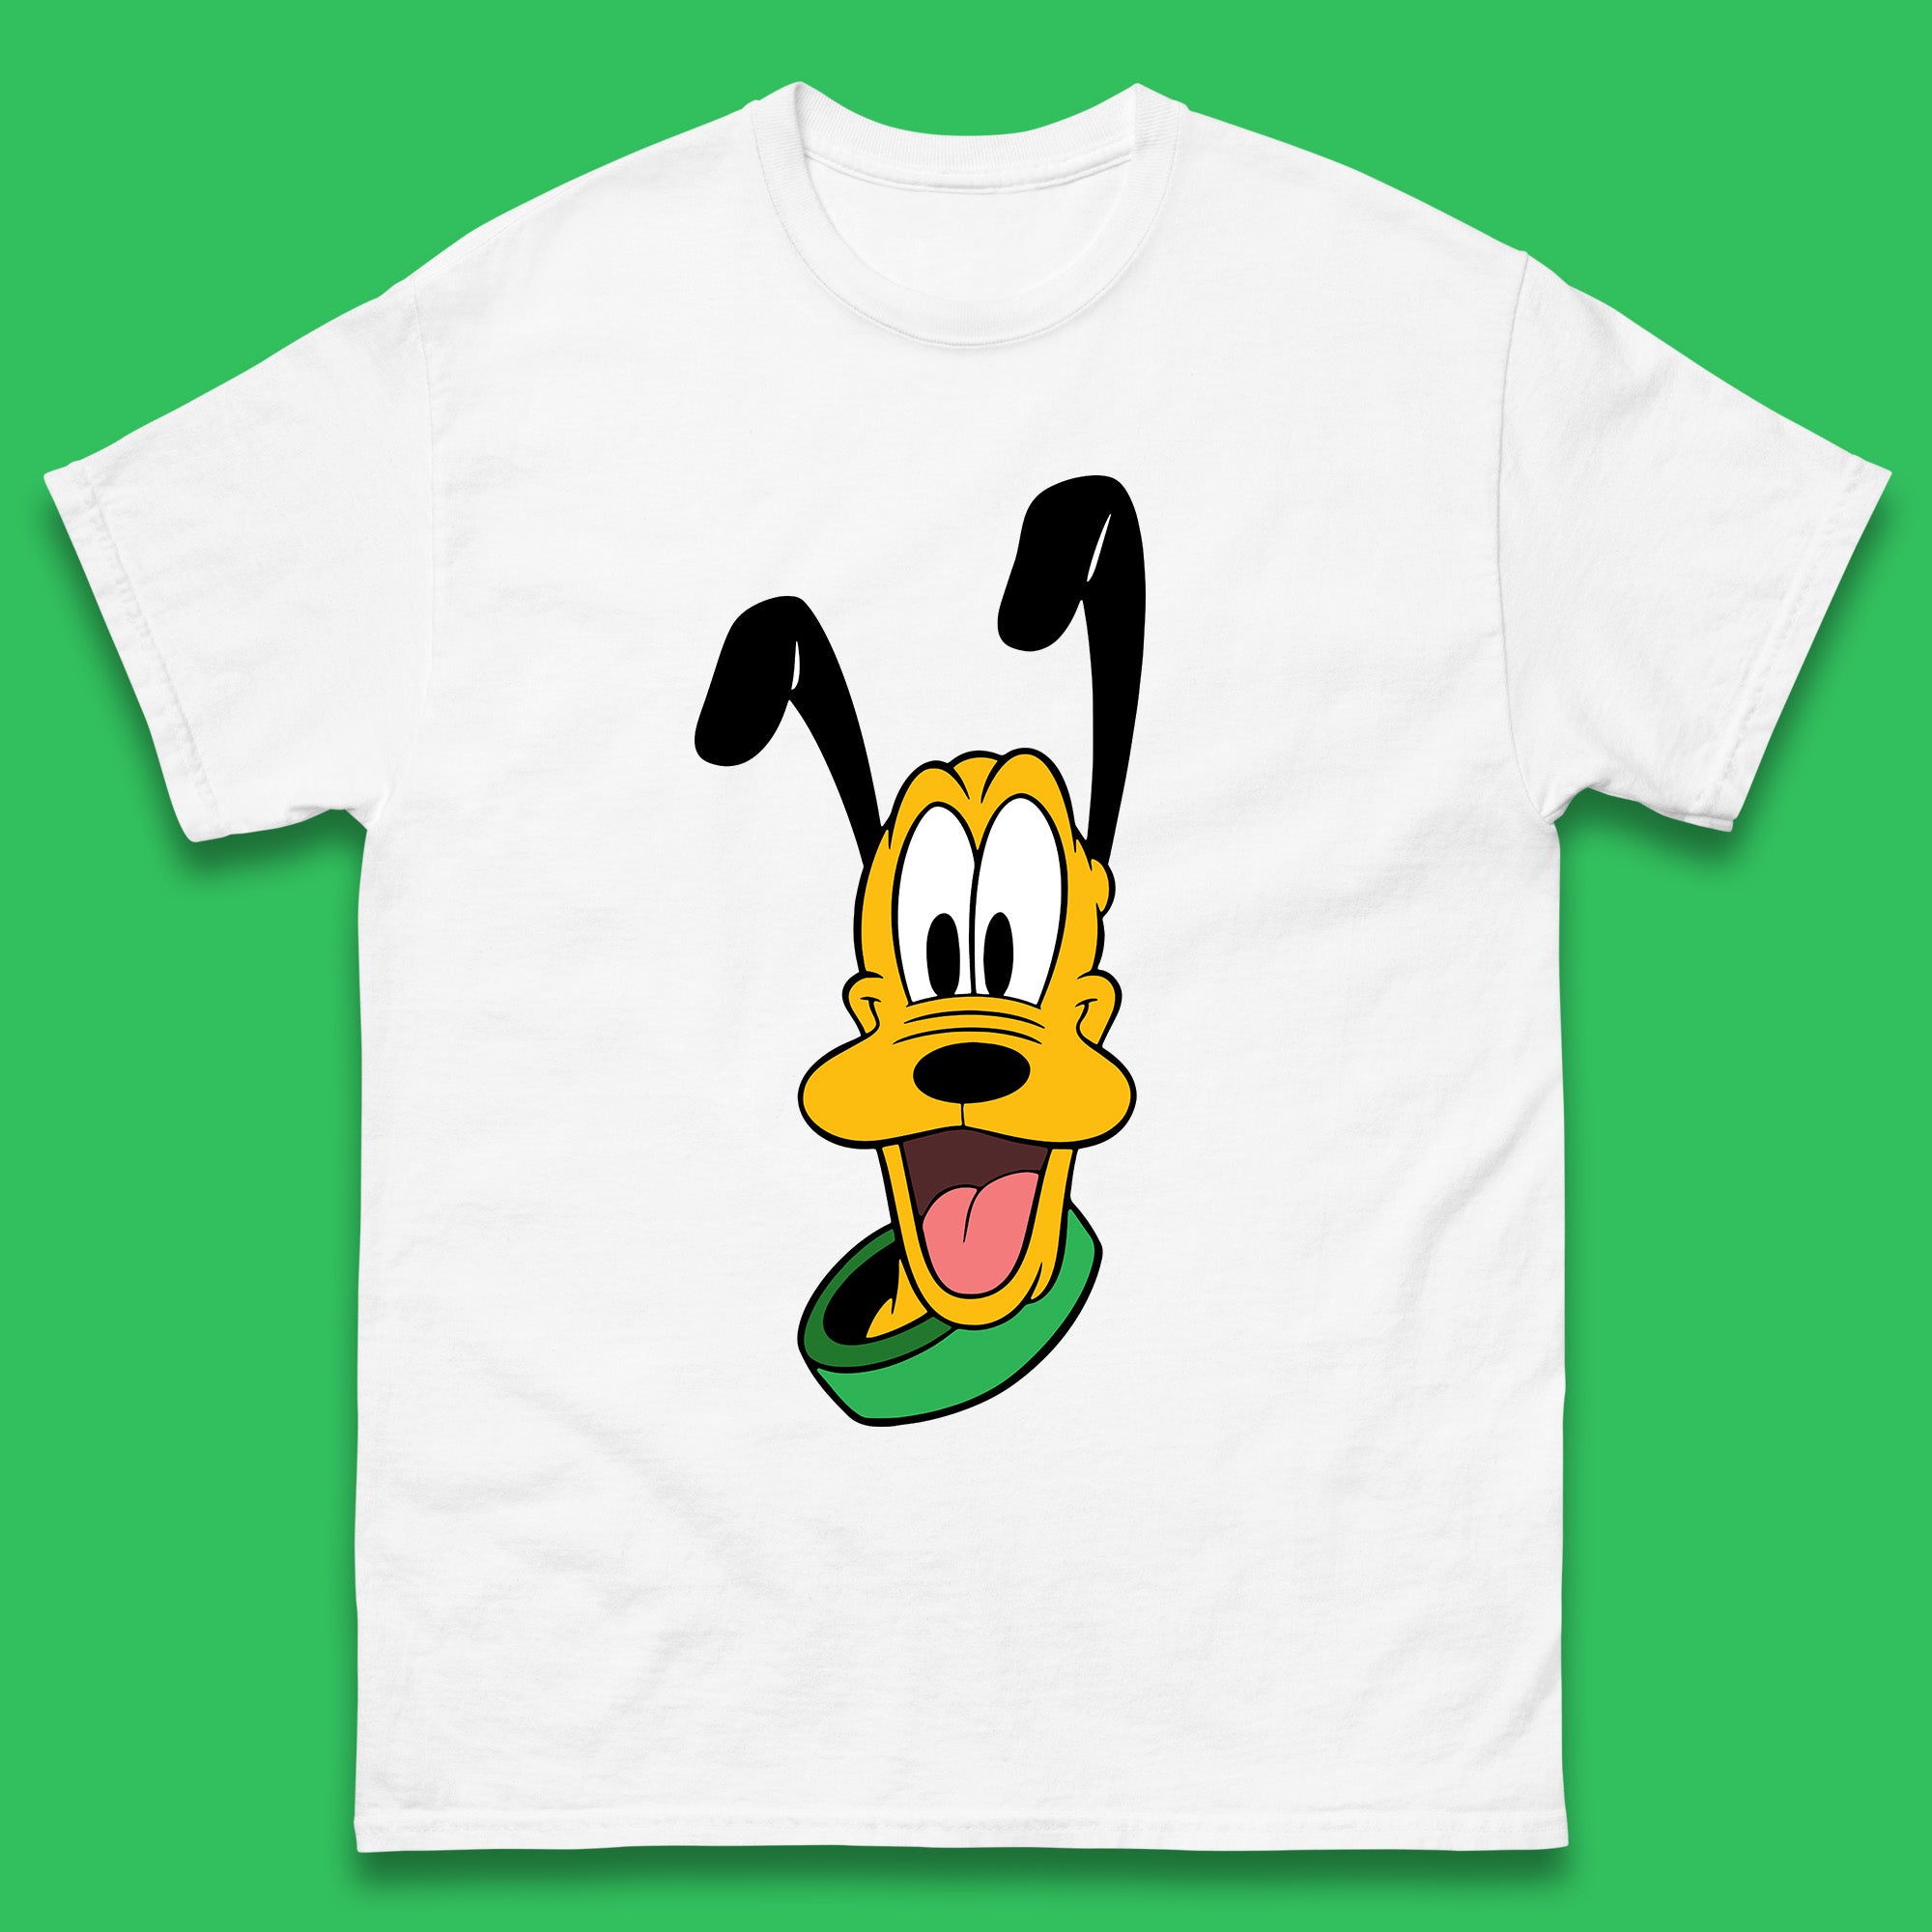 Disney Pluto Mickey Mouse's Pet Dog Cartoon Character Disney World Disneyland Trip Mens Tee Top